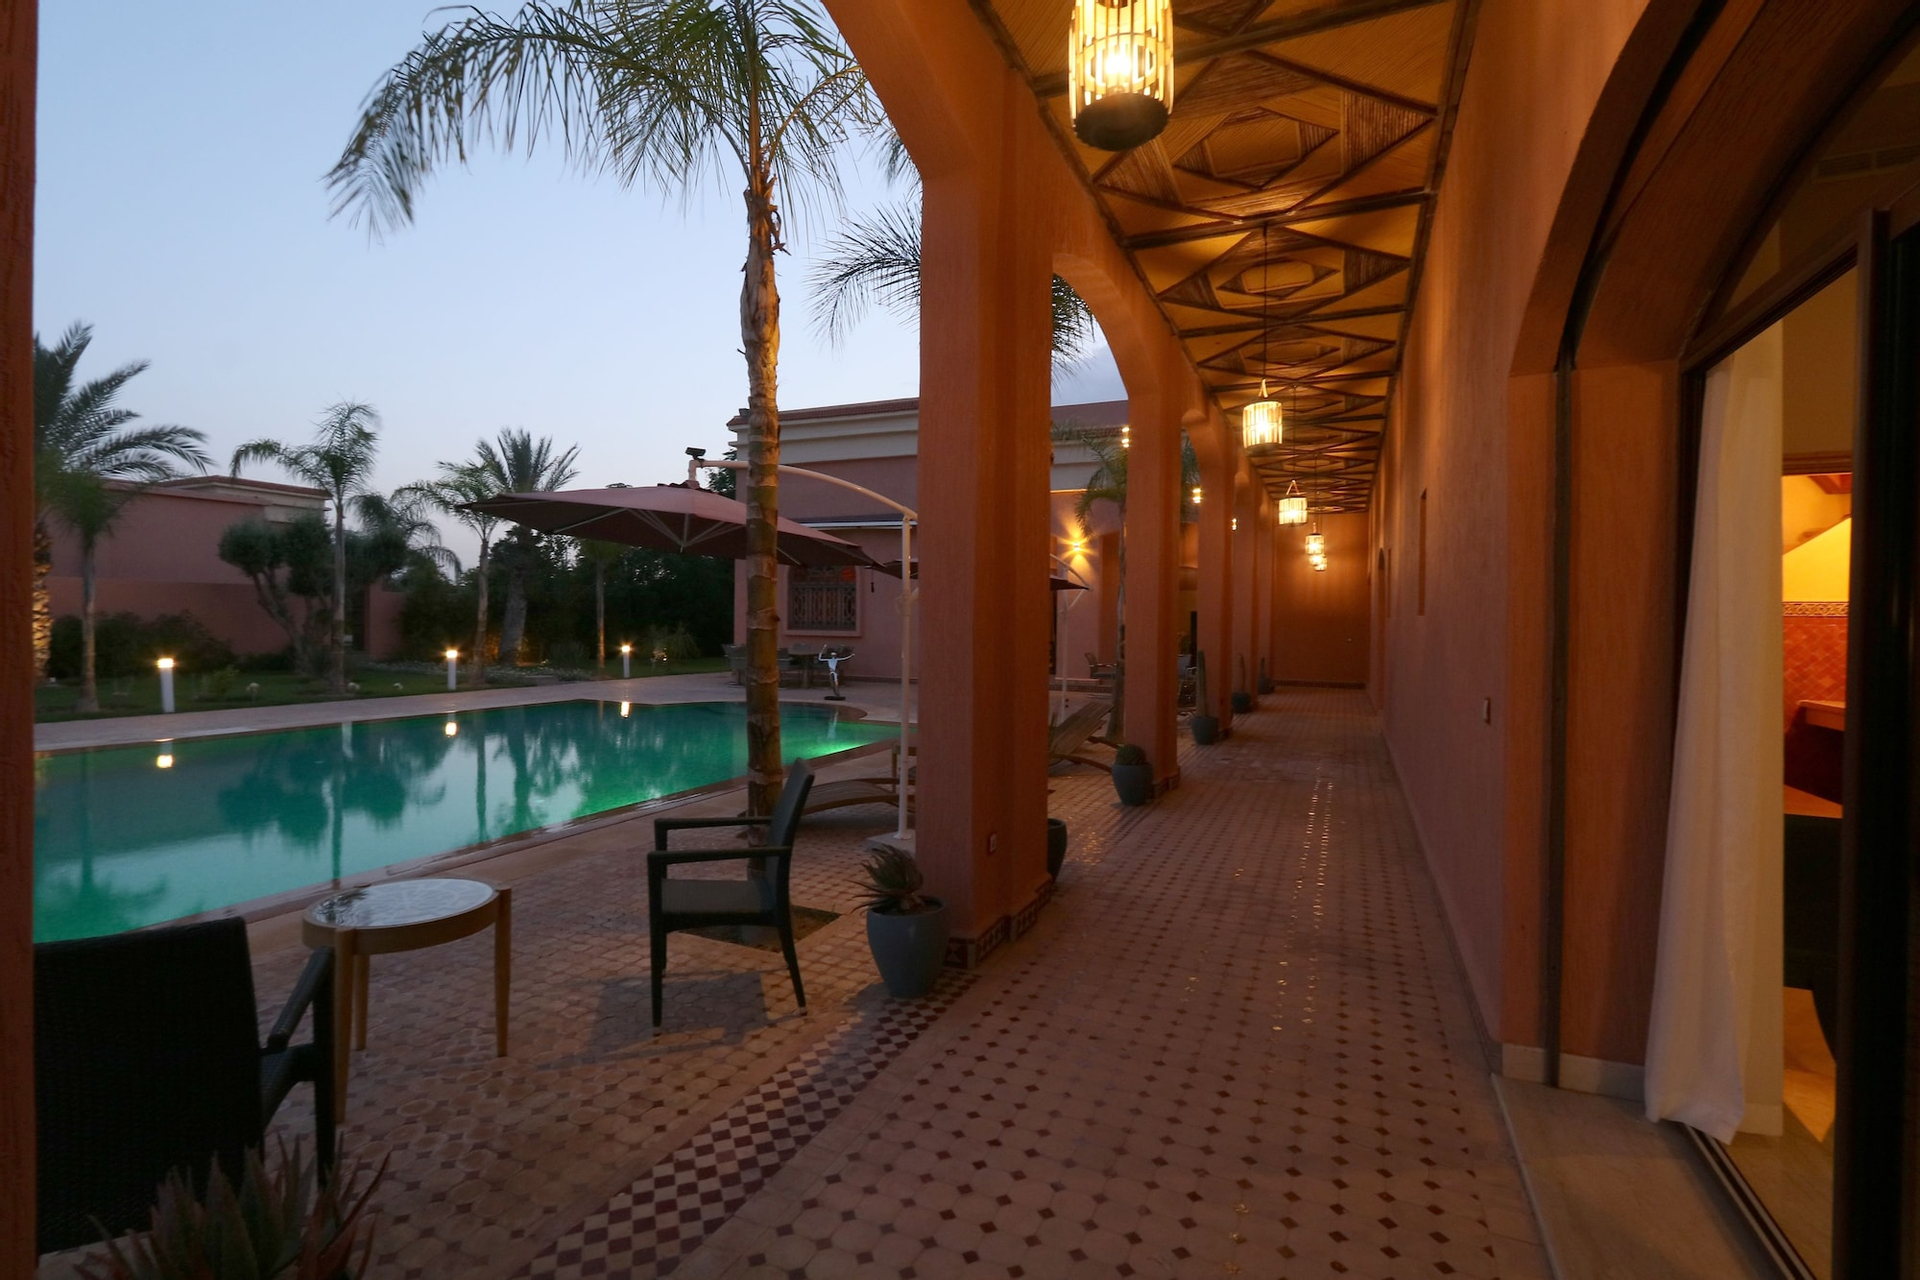 Courtyard view, Villa Alexandriaa, Marrakech